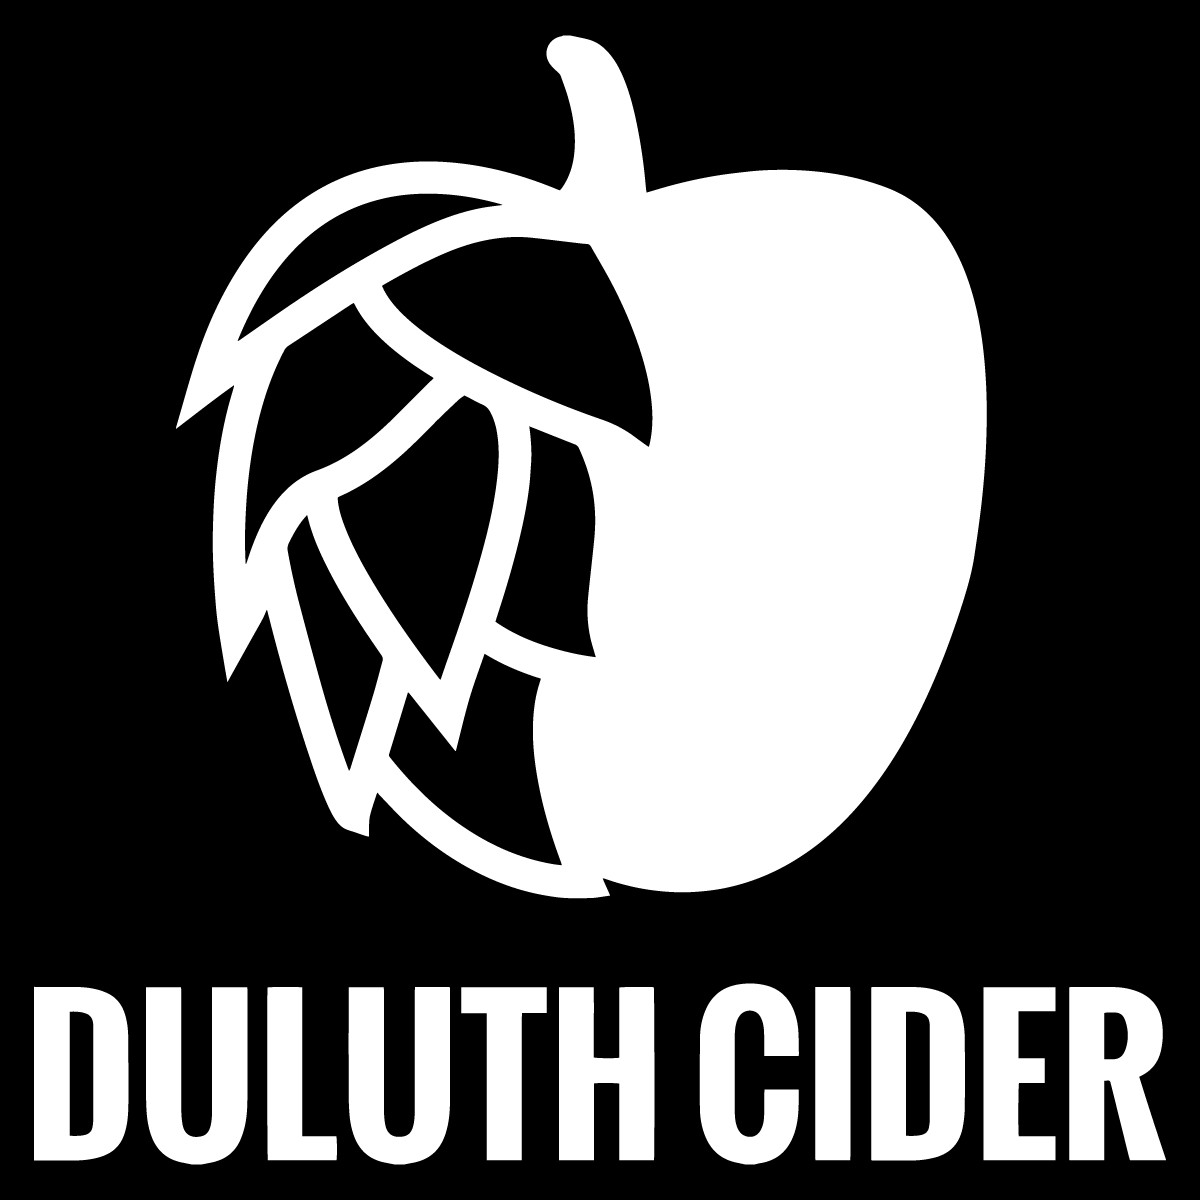 Duluth Cider